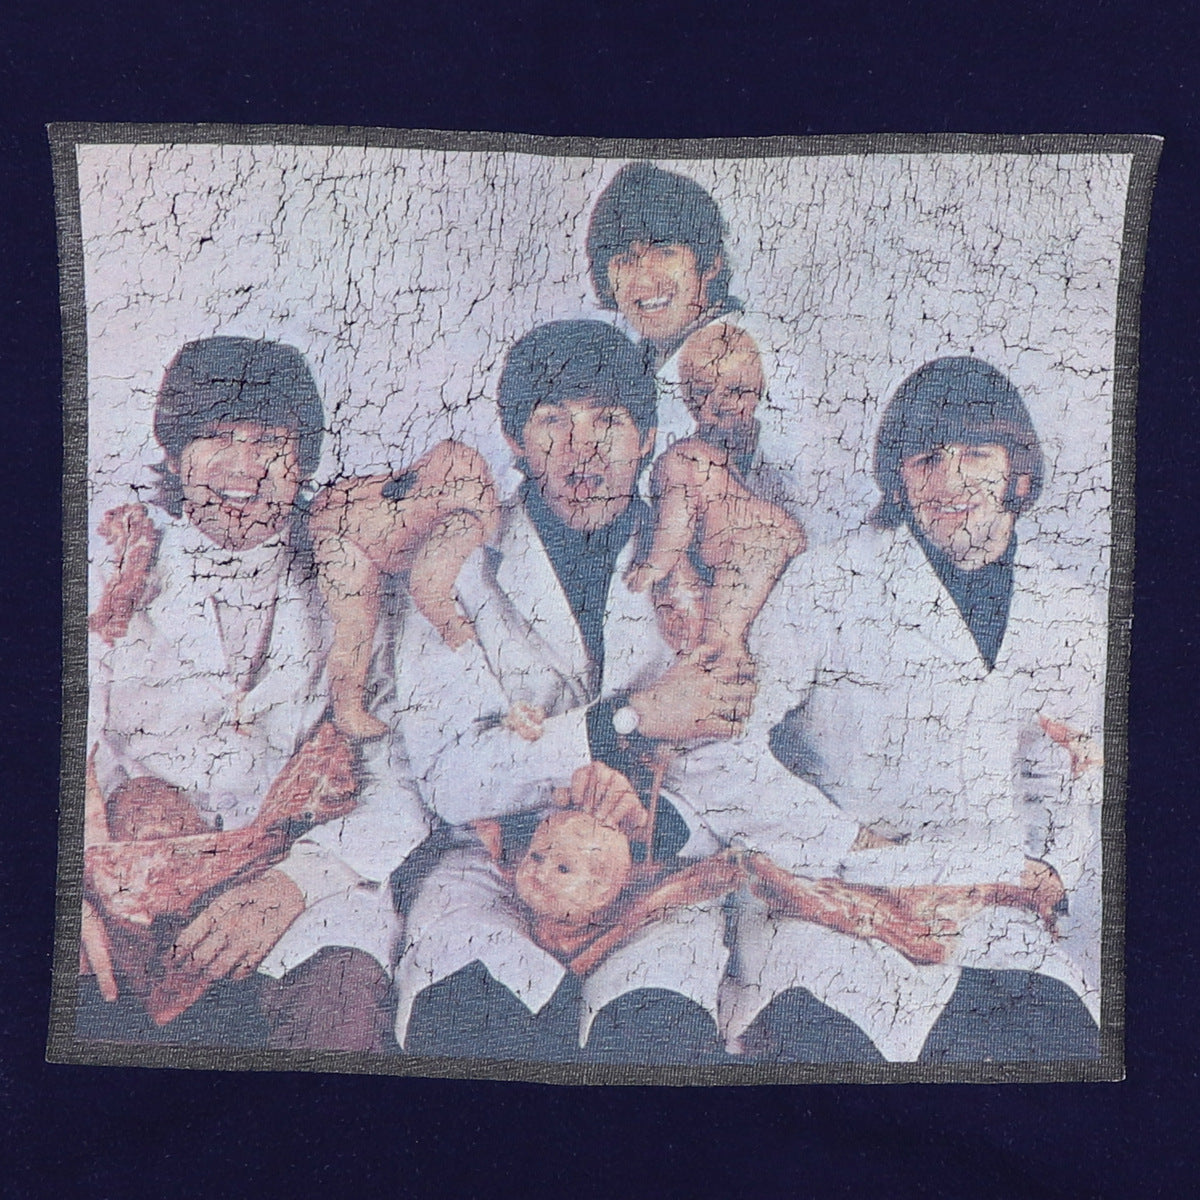 1970s Beatles Butcher Album Cover Shirt